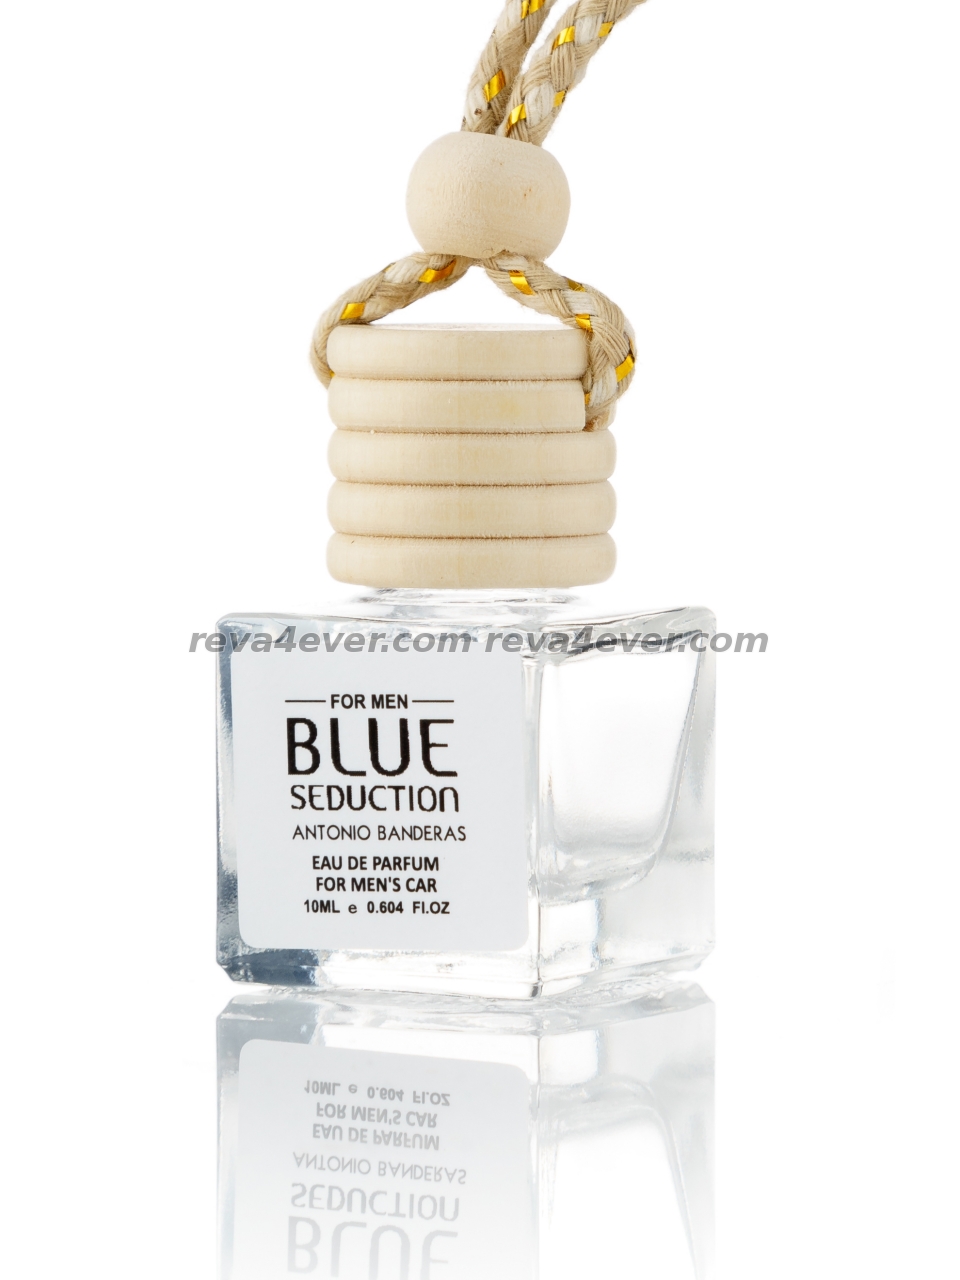 Antonio Banderas Blue Seduction 10 ml car perfume